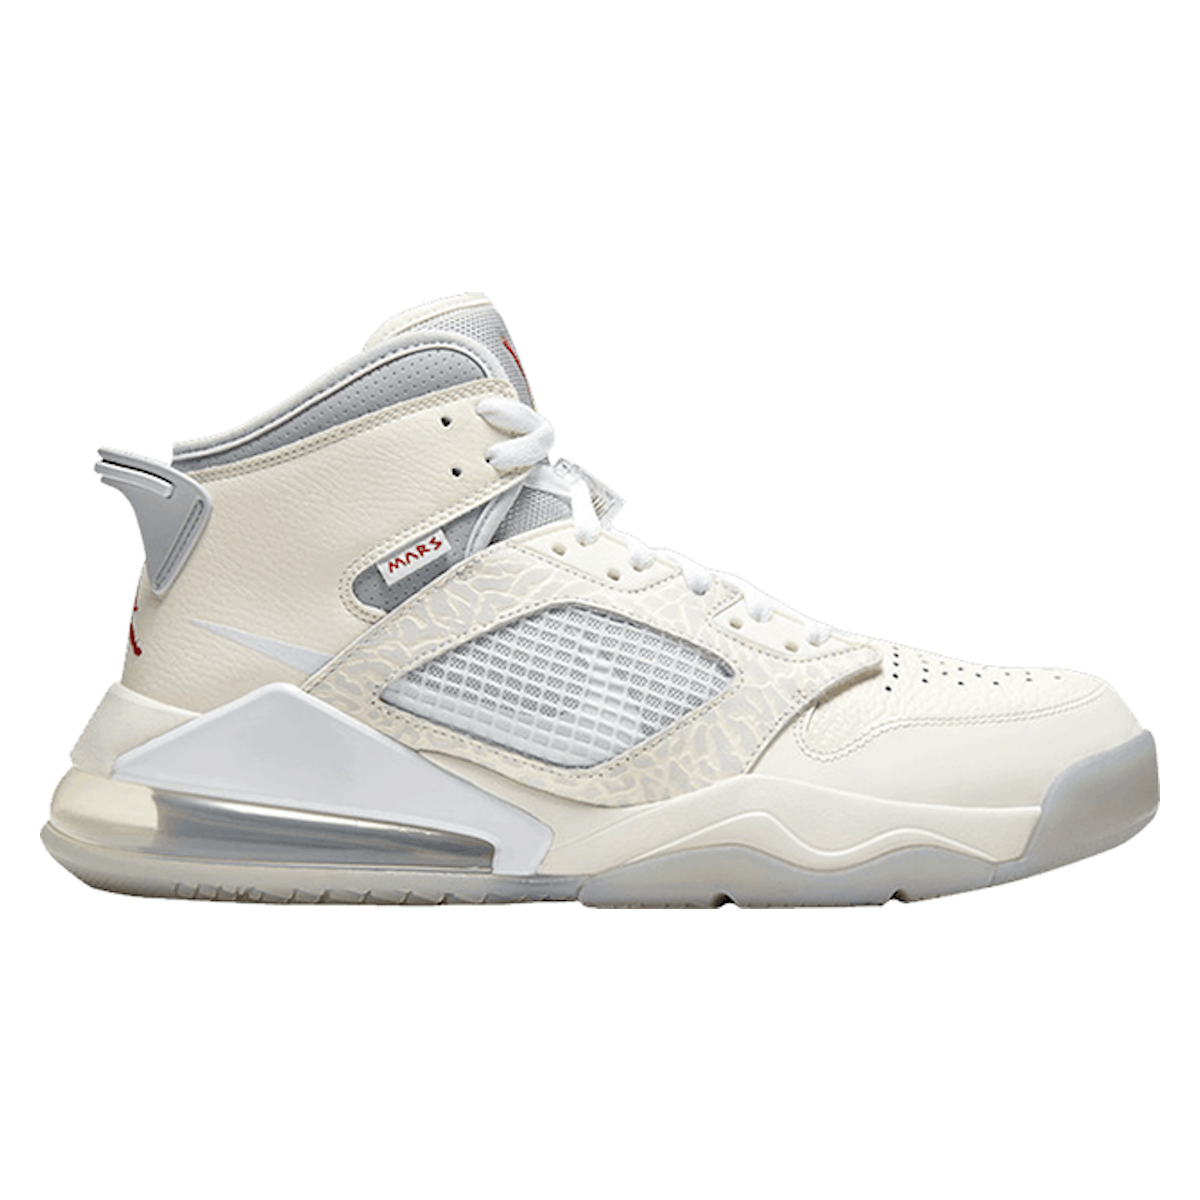 Sneakersnstuff x Jordan Mars 270 "Past, Present, Future"